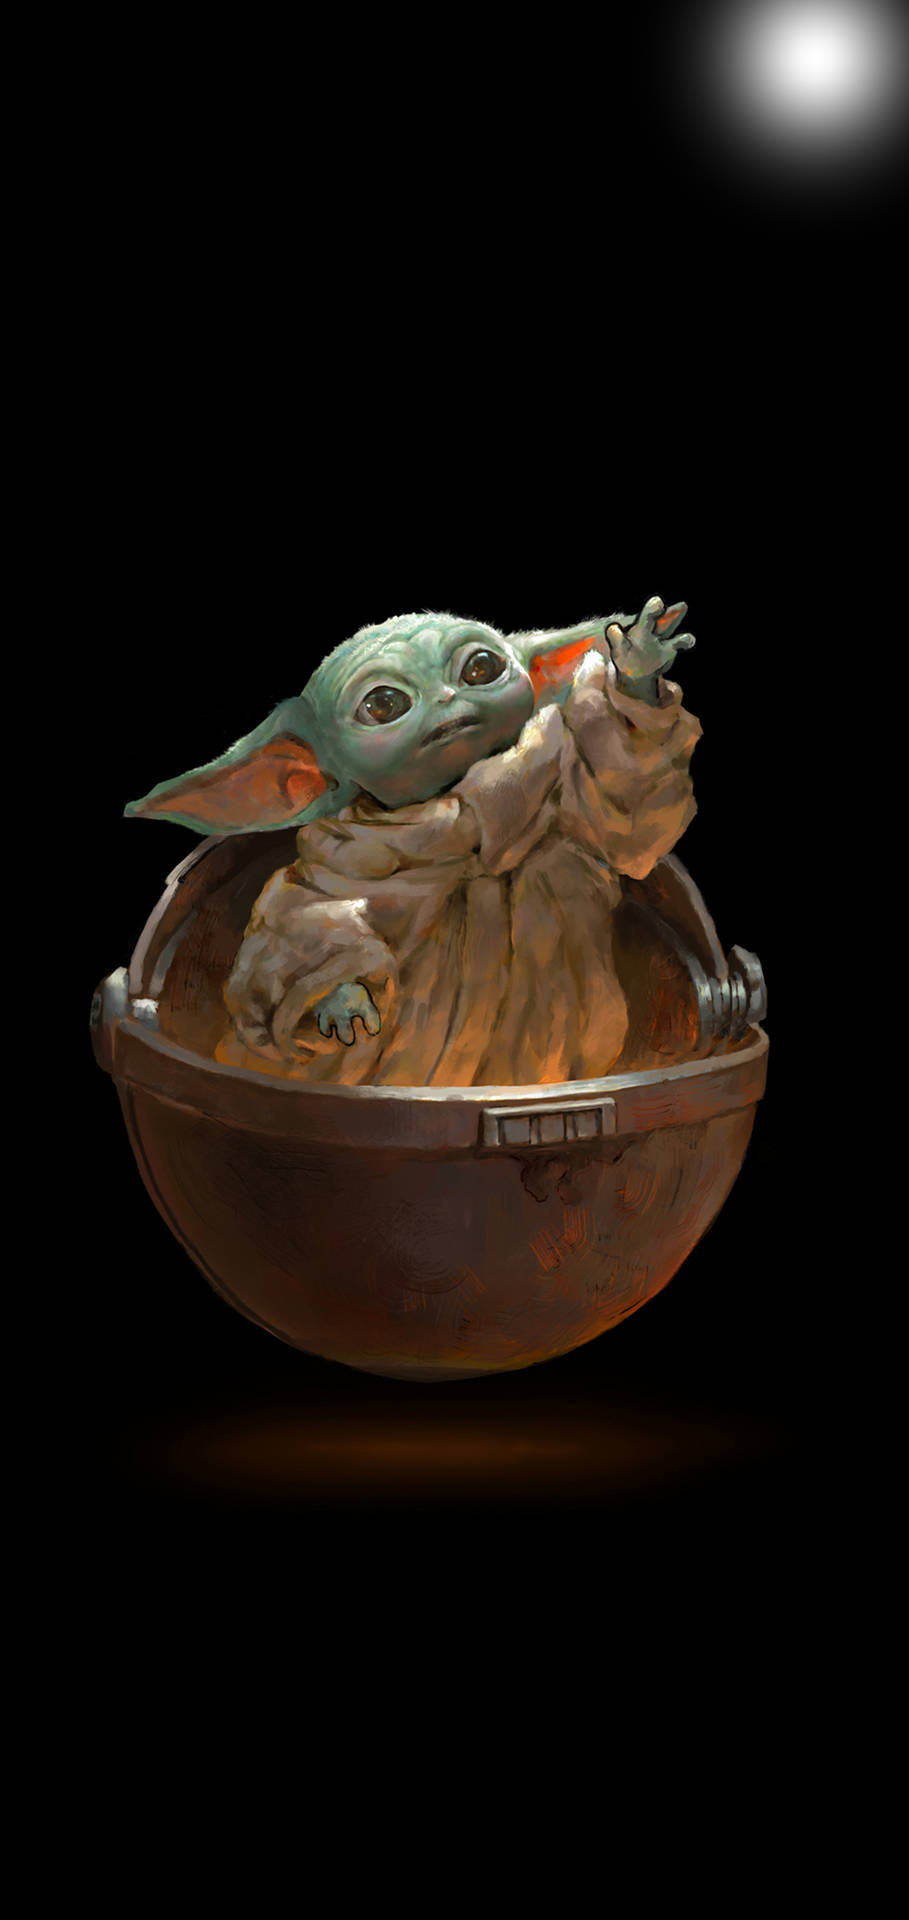 Artwork Of Baby Yoda